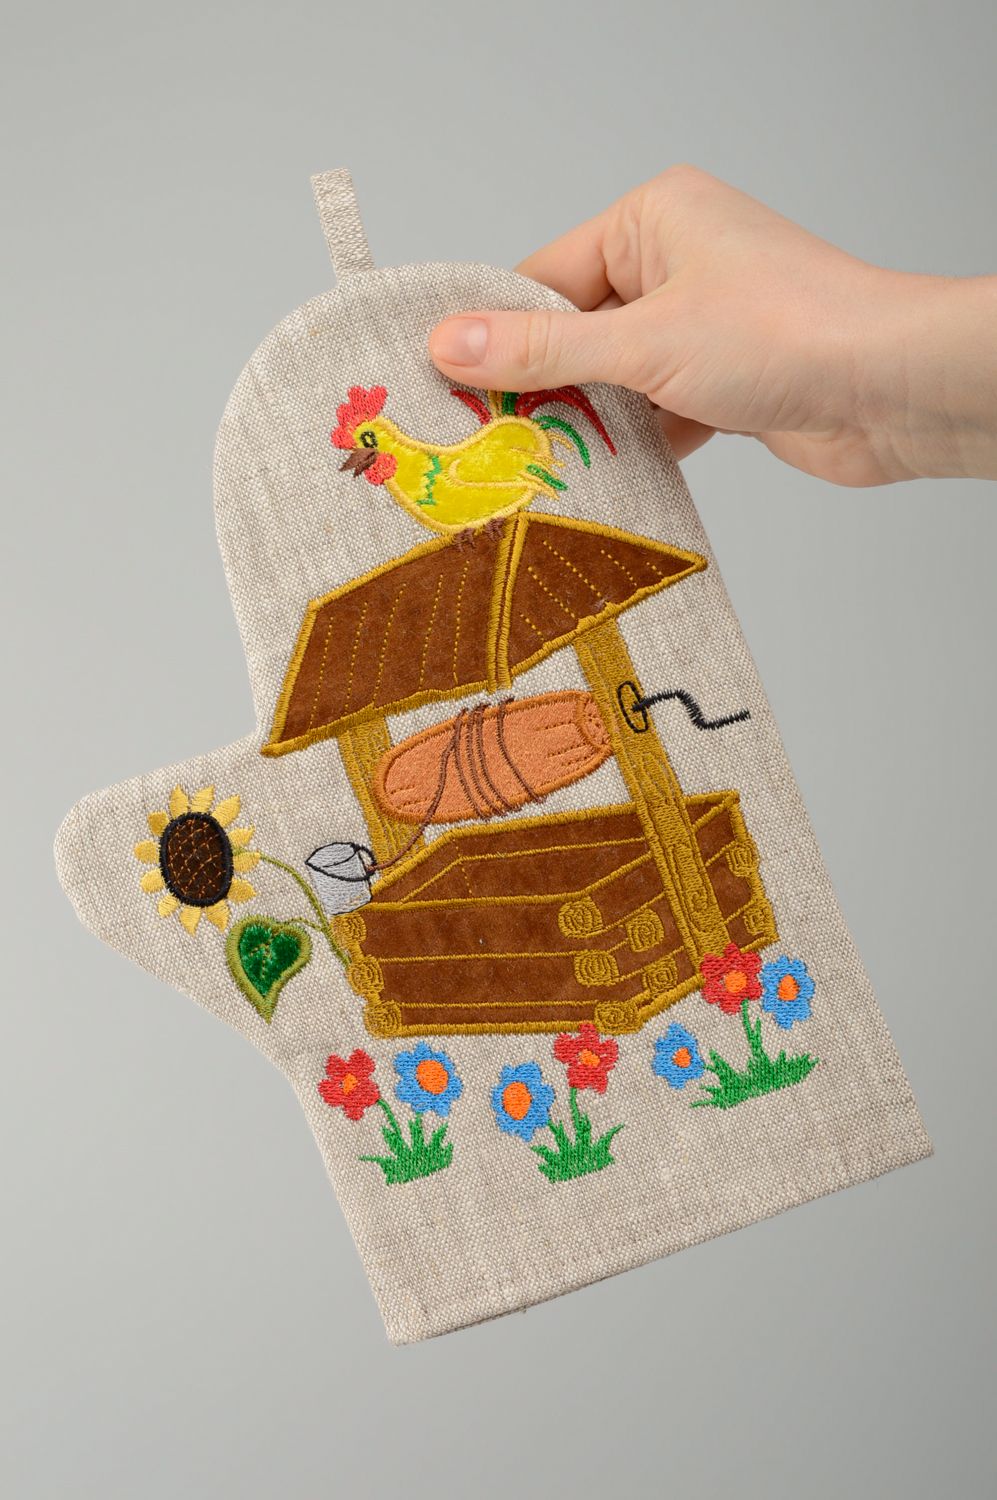 Decorative oven mitt with applique work photo 3